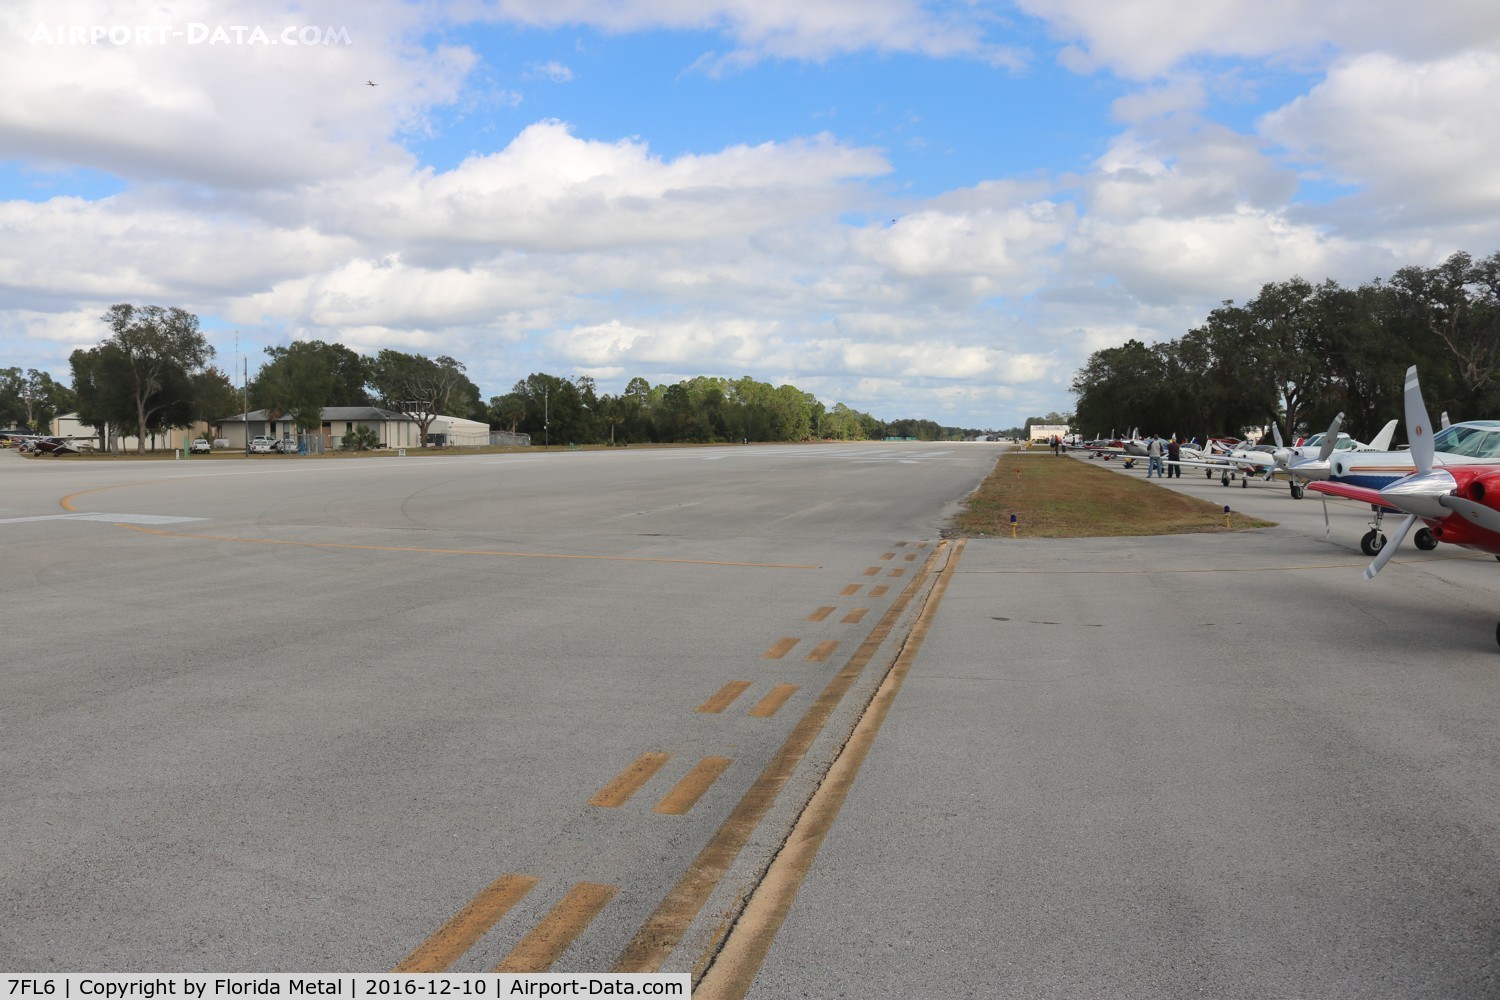 Spruce Creek Airport (7FL6) - Spruce Creek runway